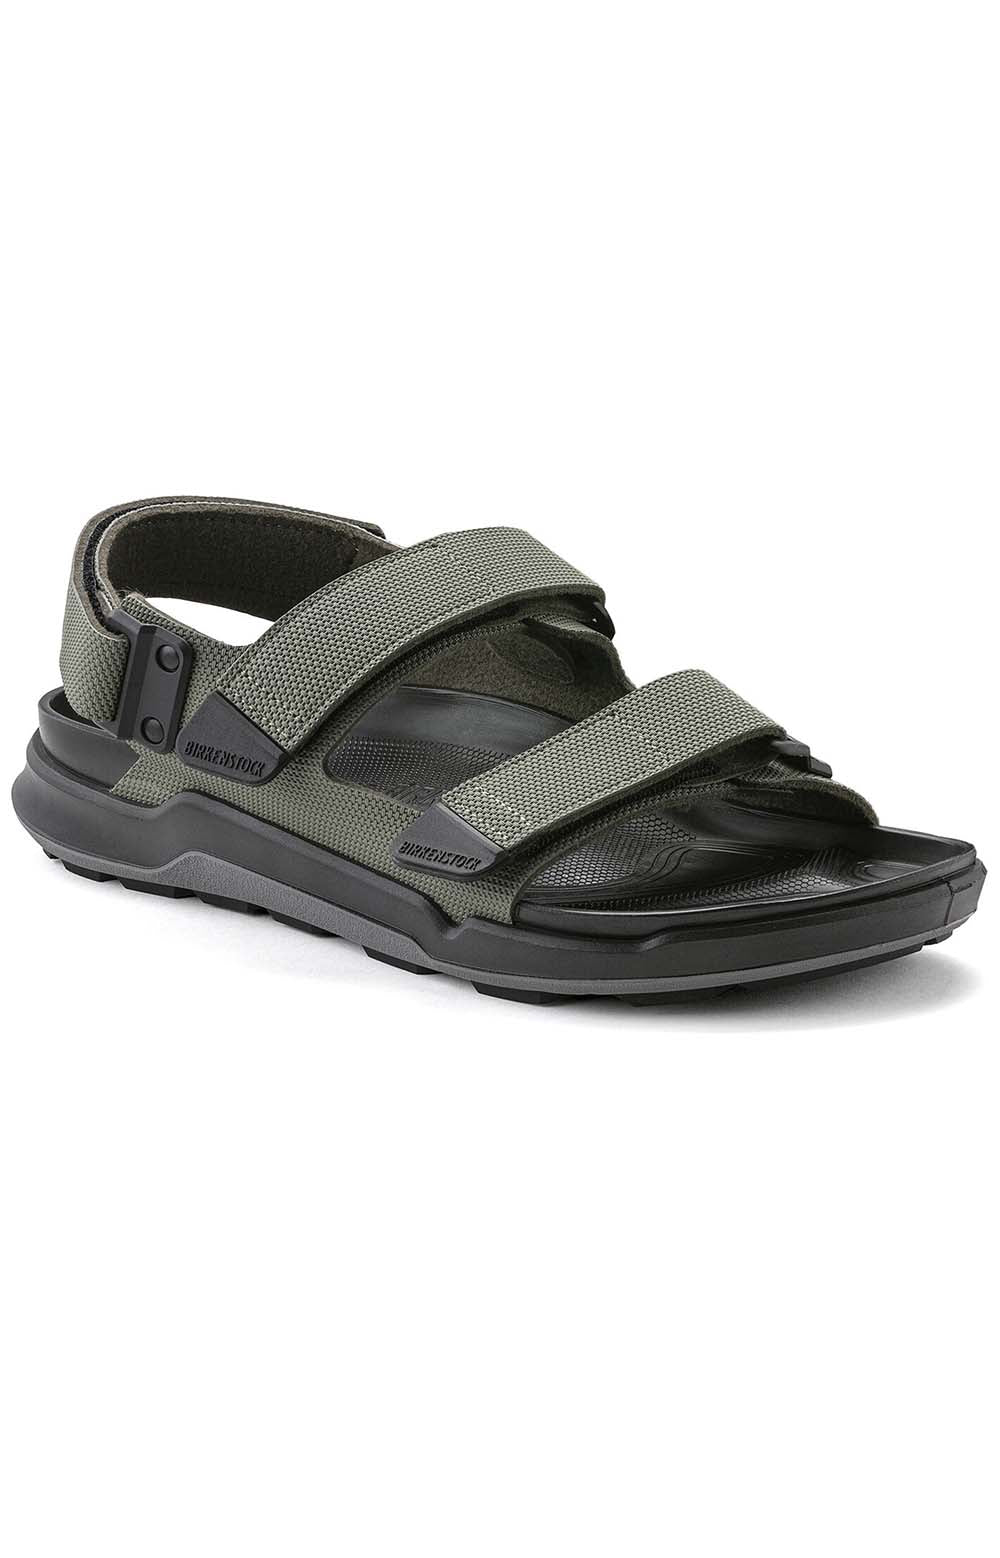 Tatacoa Sandals Futura Khaki for outdoor adventures, providing comfort and style